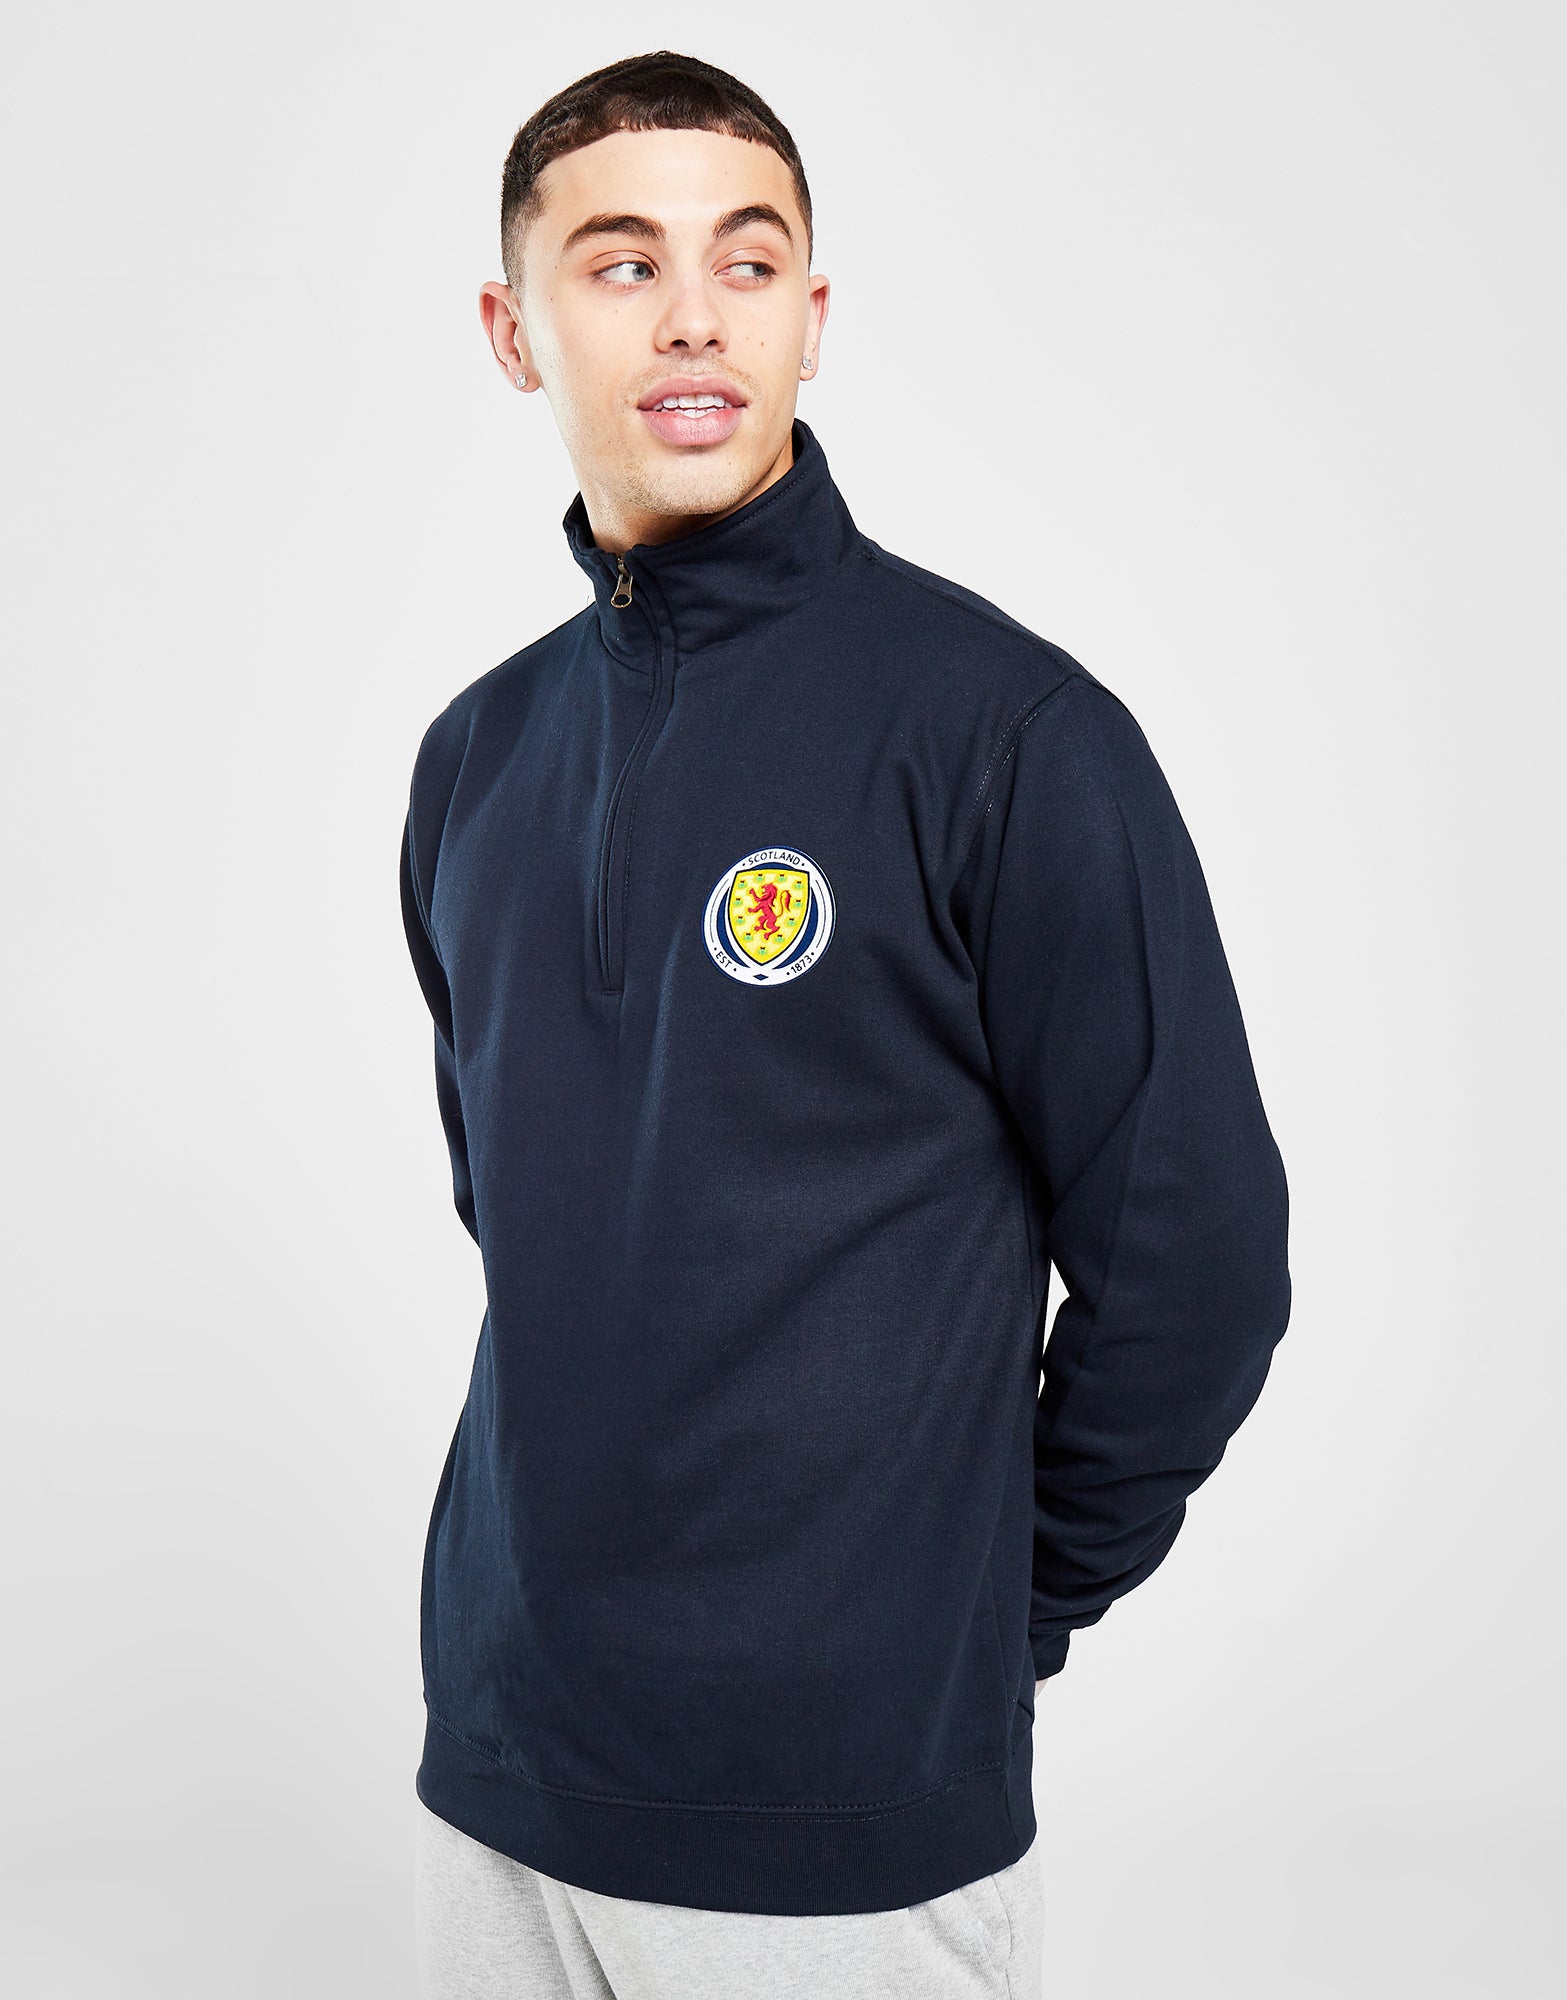 Official Team Scotland Crest Badge Zip Sweat - Navy - The World Football Store